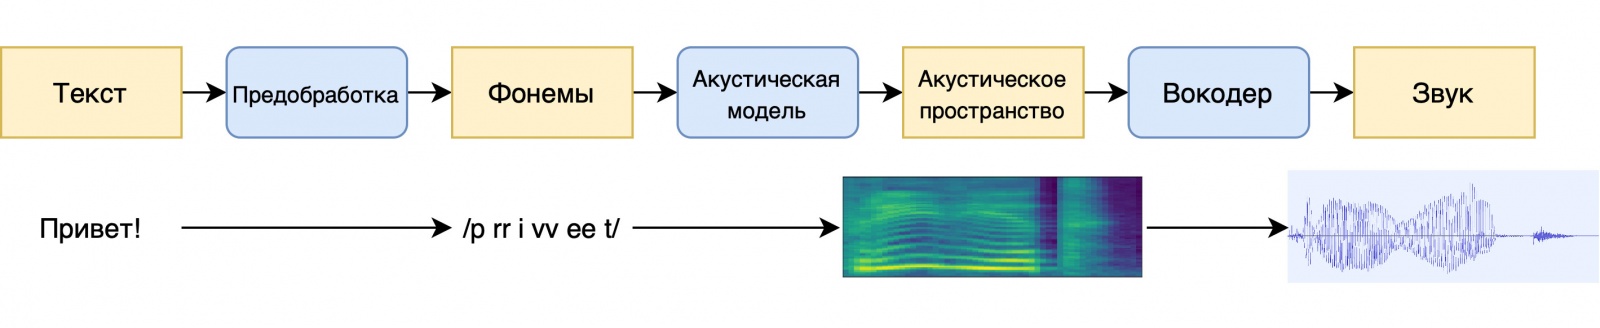 Шёпот и эмоции в Алисе: история развития голосового синтеза Яндекса - 2